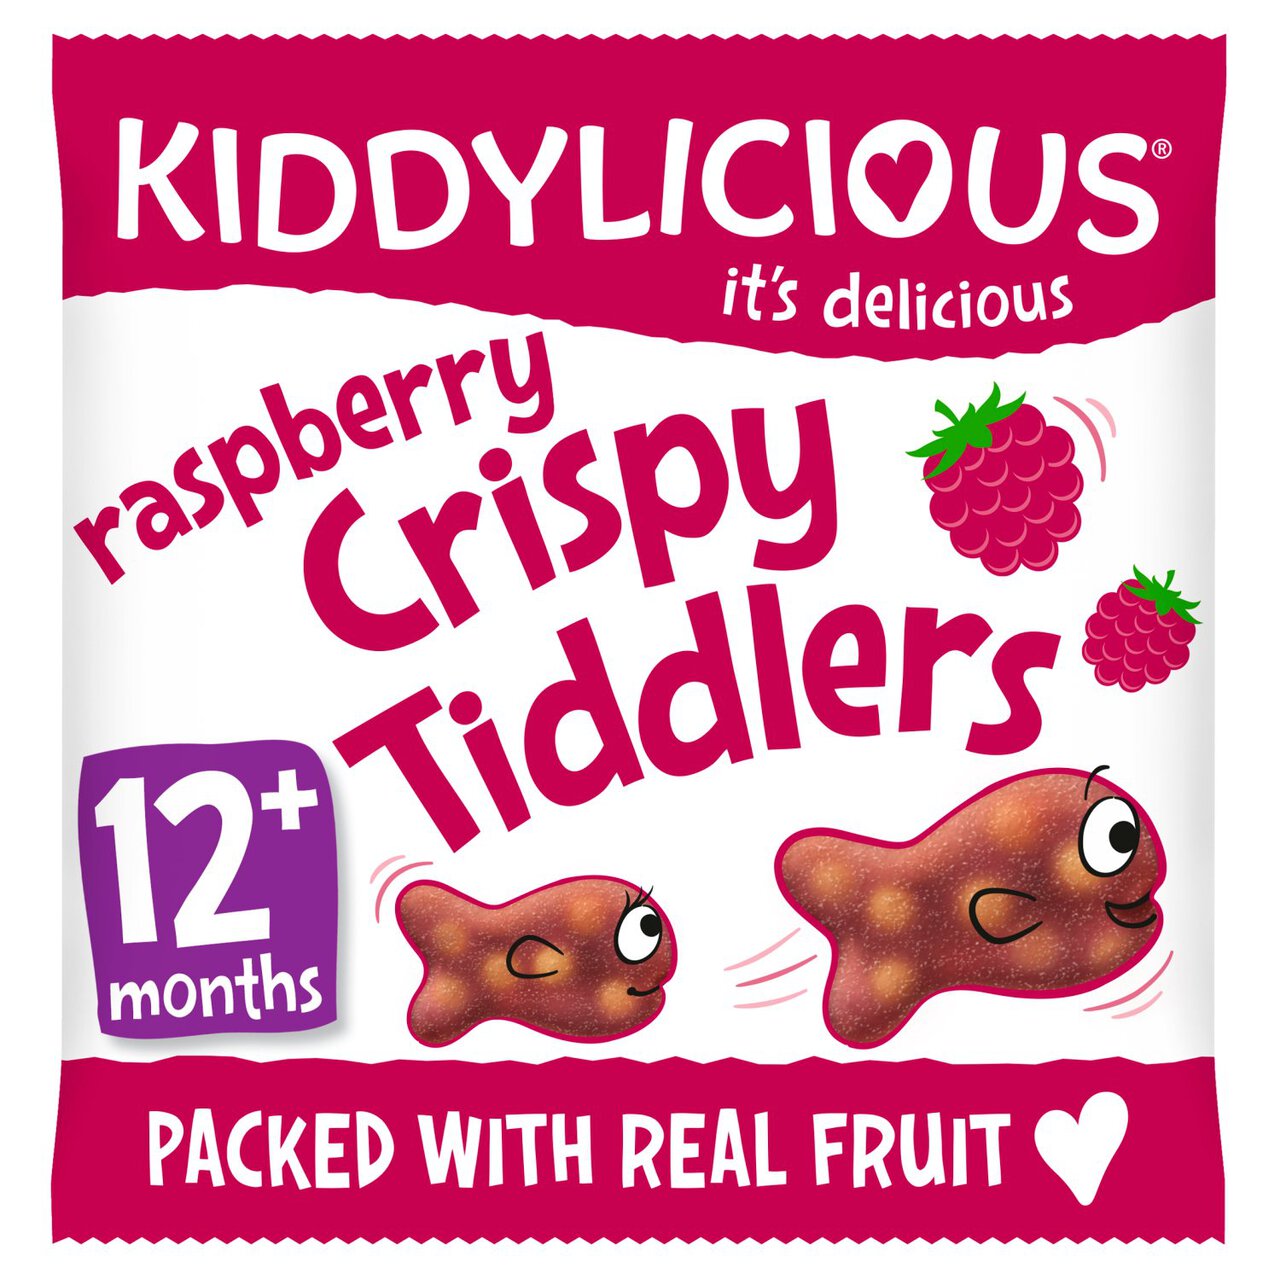 Kiddylicious Raspberry Crispy Tiddlers Toddler Snack 12 months+ 12g